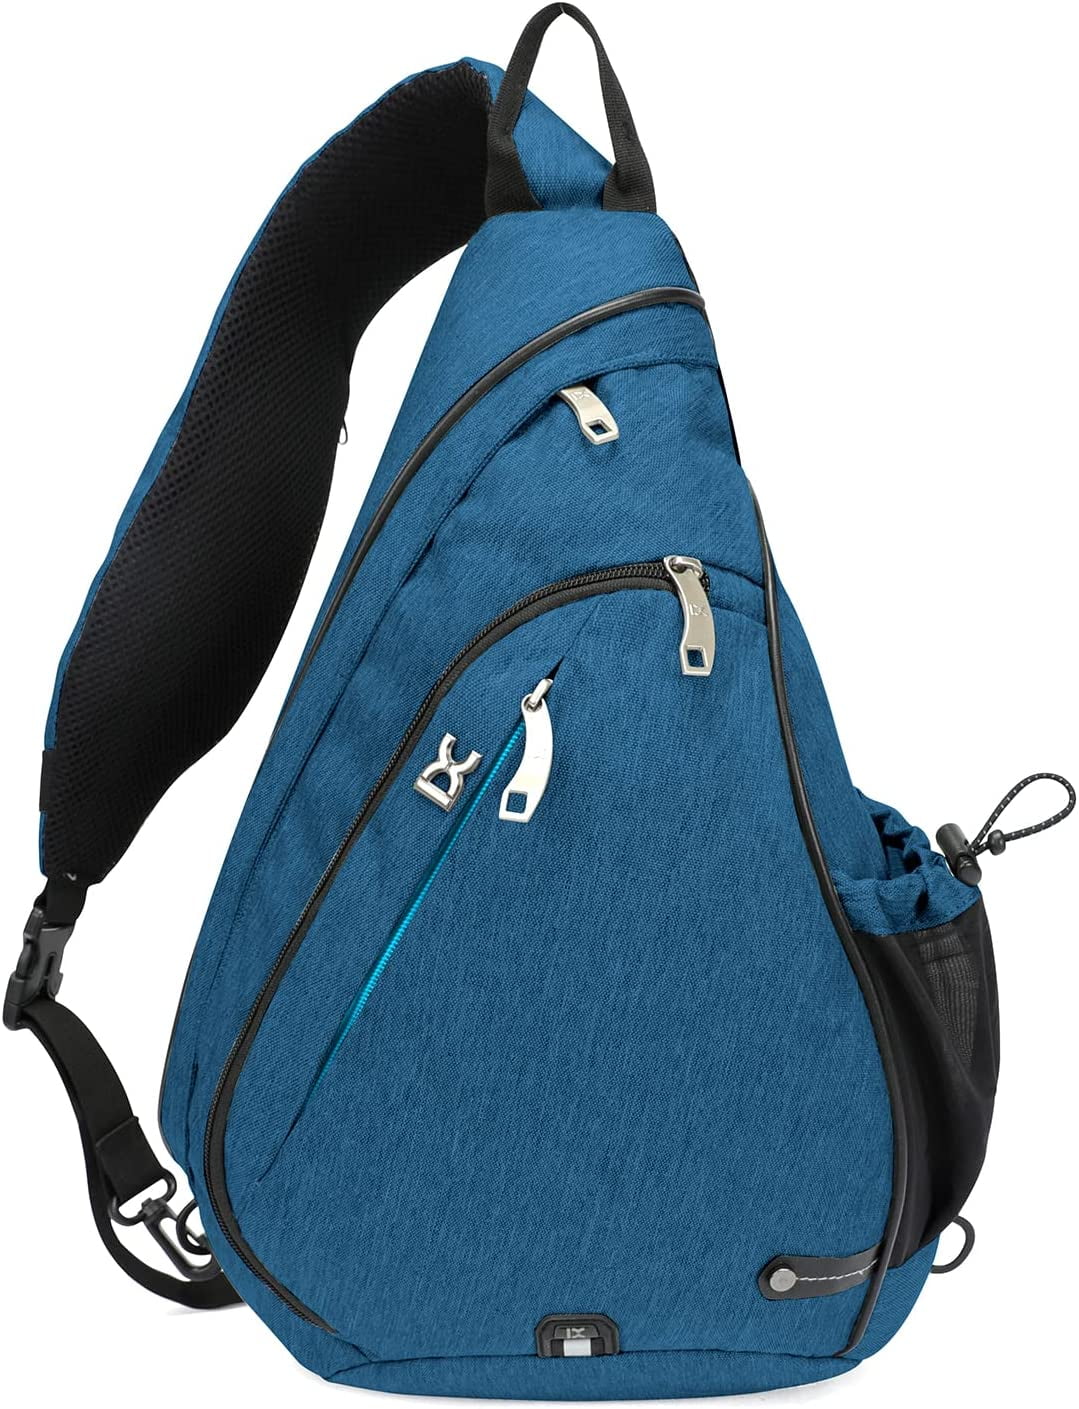 JSHXJBWR Pop Art Banana Seamless Pattern Sling Bag For Women Men,Fruits  Print Crossbody Shoulder Bags Casual Sling Backpack Chest Bag Travel Hiking